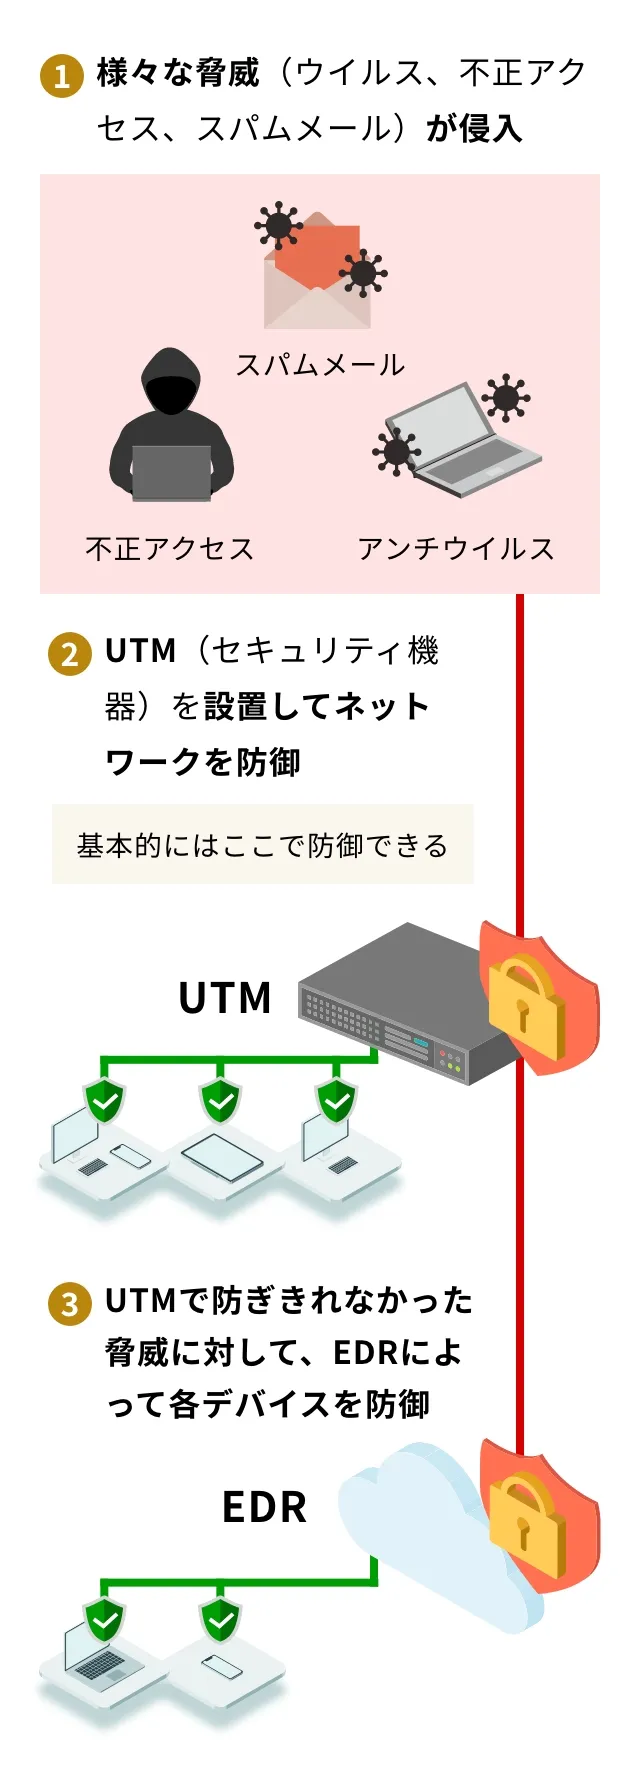 UTM機器とDER導入のイメージ